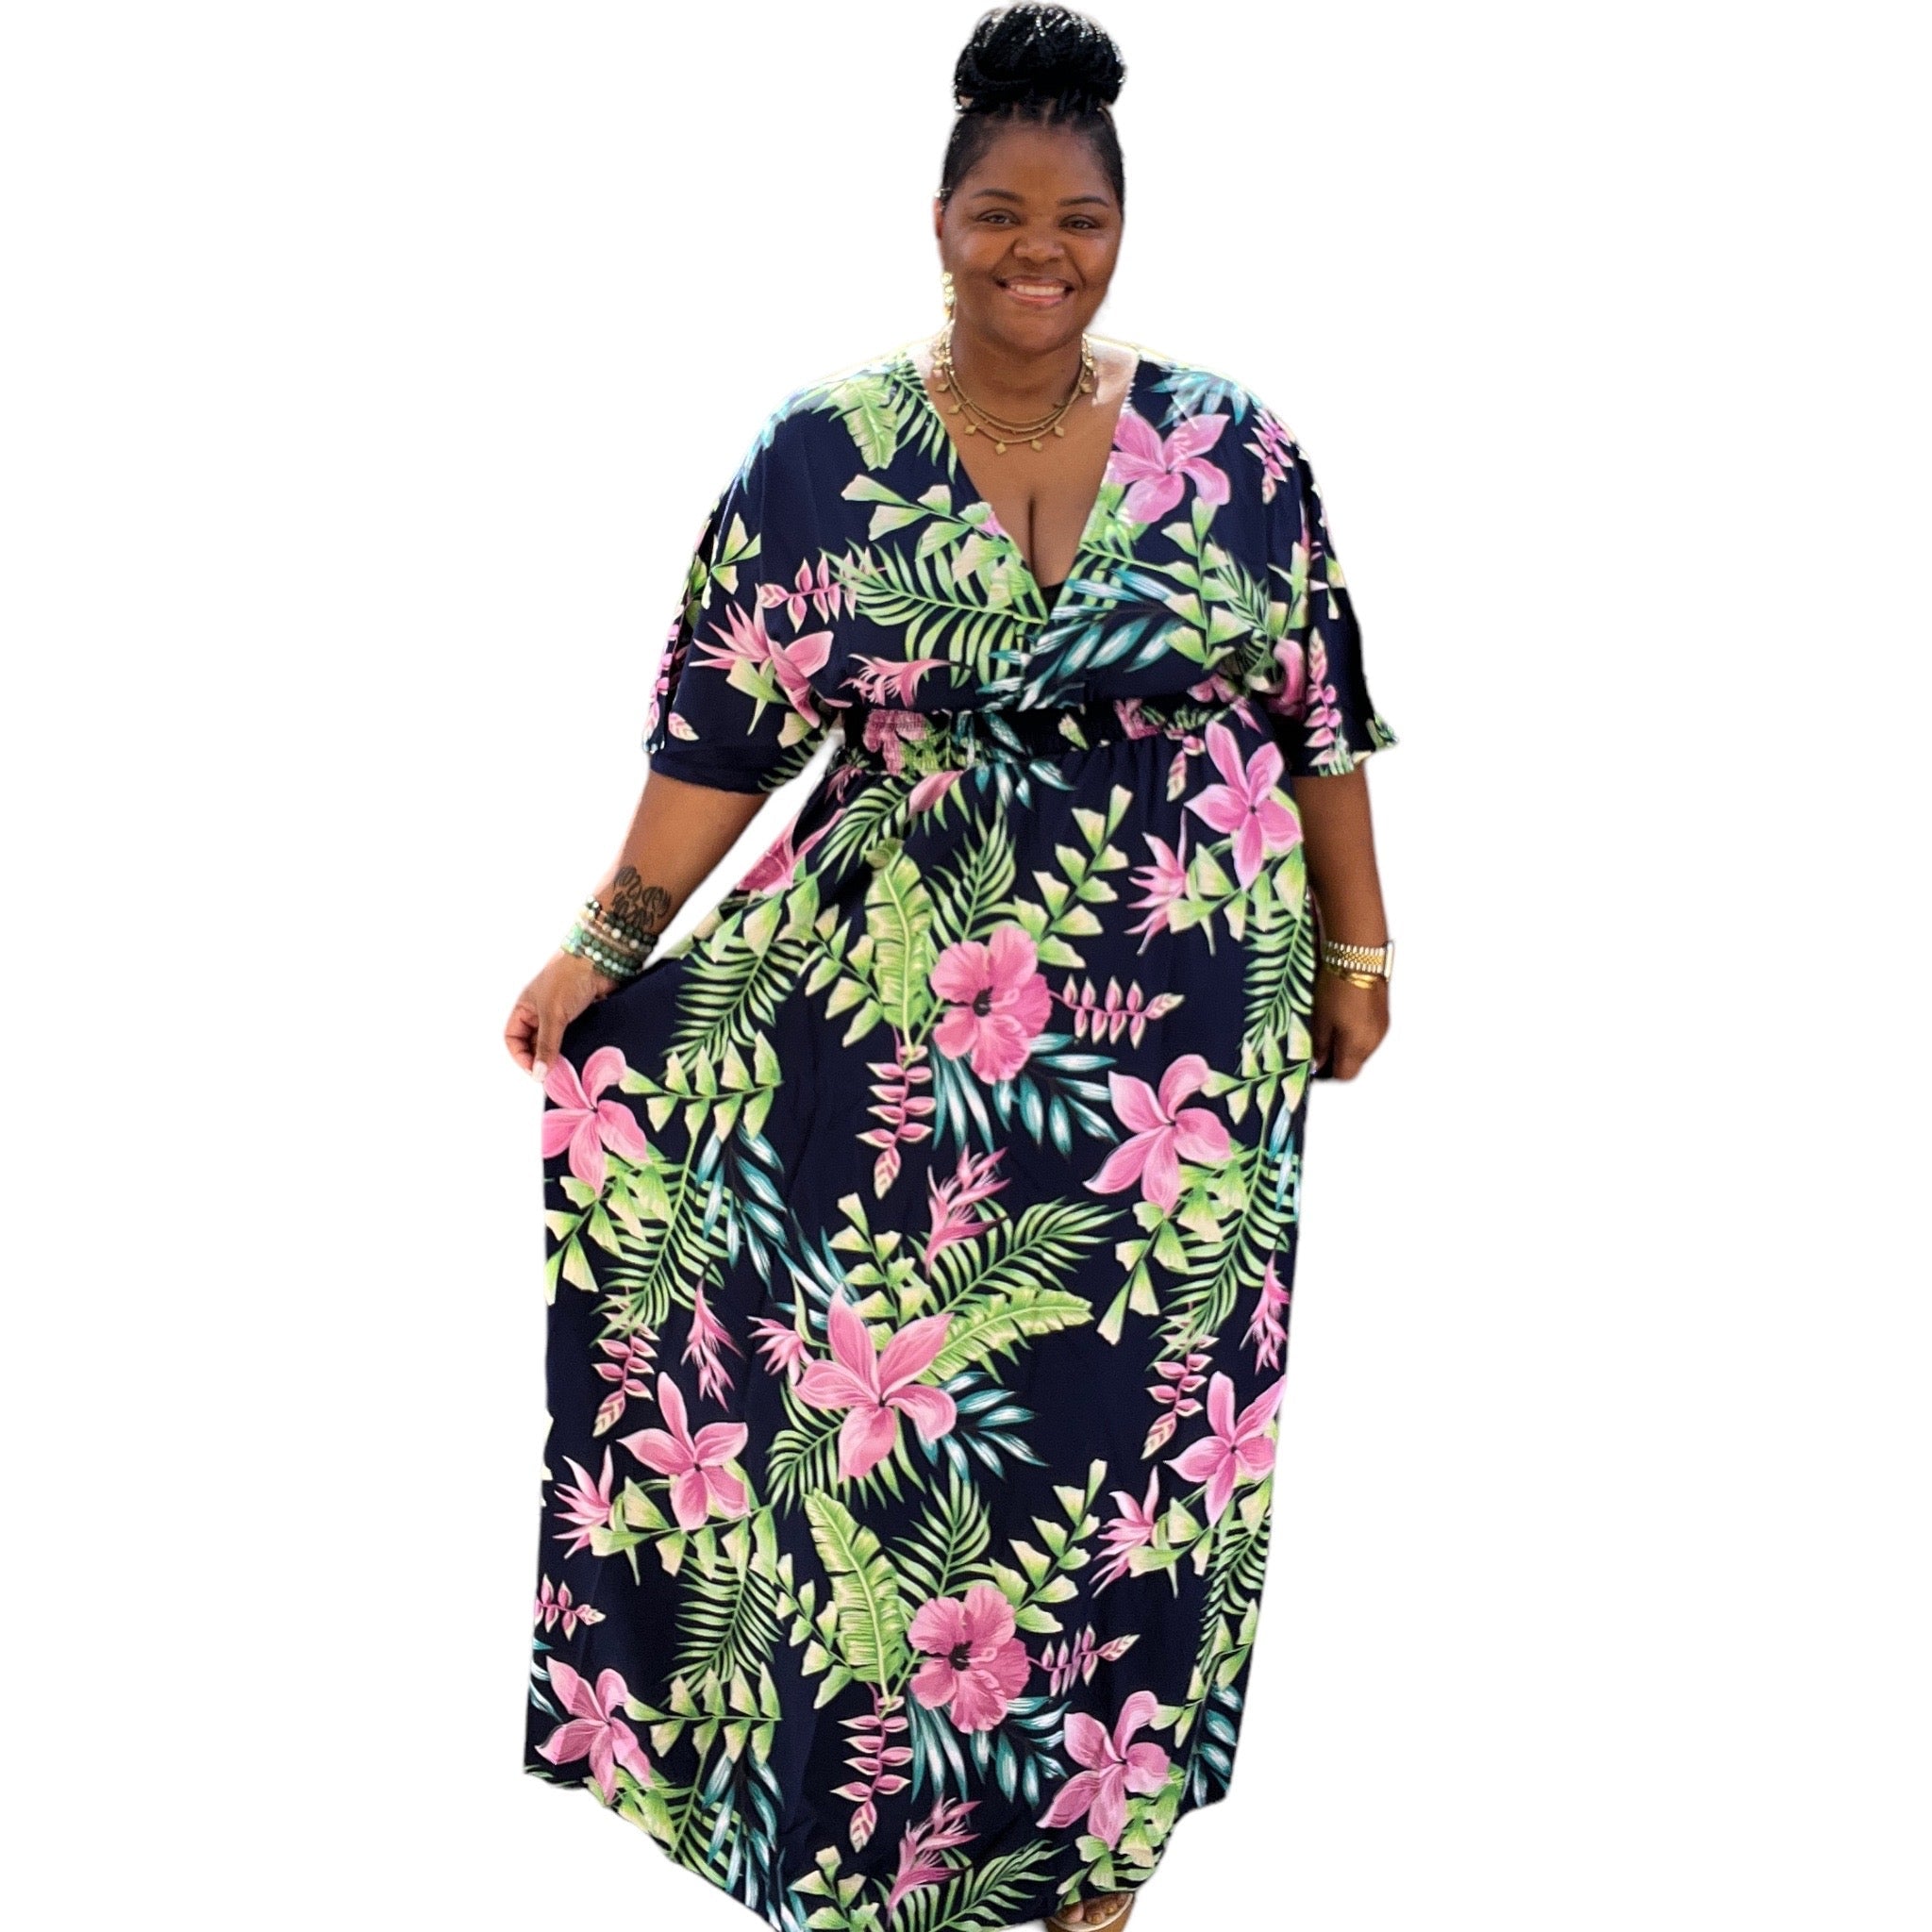 Plus Size Floral Tropical V Cut Maxi Dress - Fabulously Dressed Boutique 